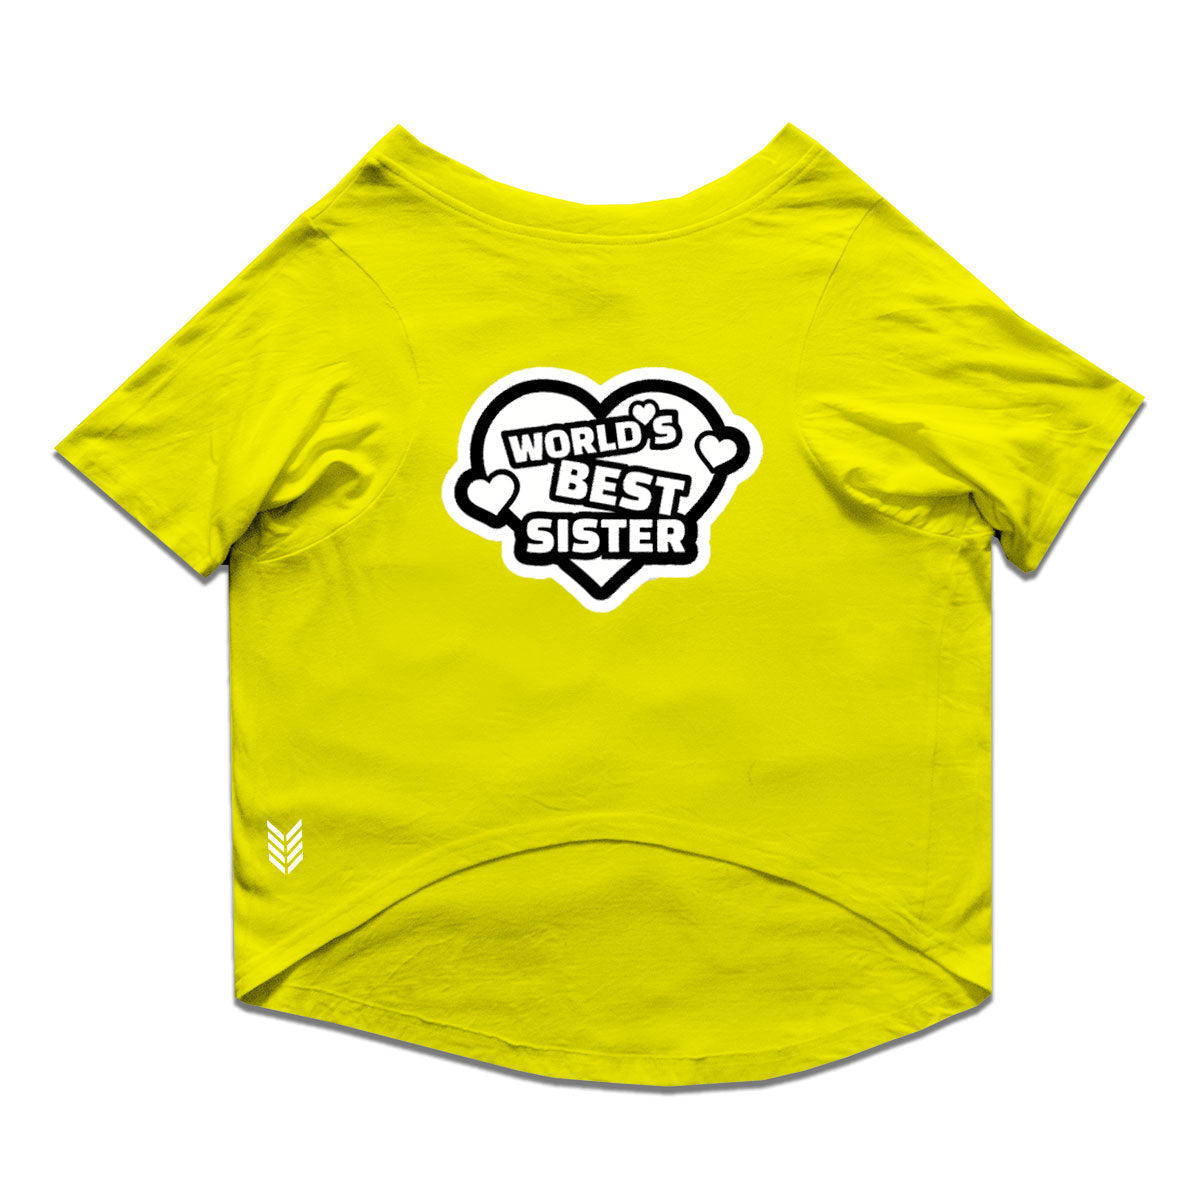 Ruse / Yellow Ruse Basic Crew Neck 'World's Best Sister' Printed Half Sleeves Dog Tee11